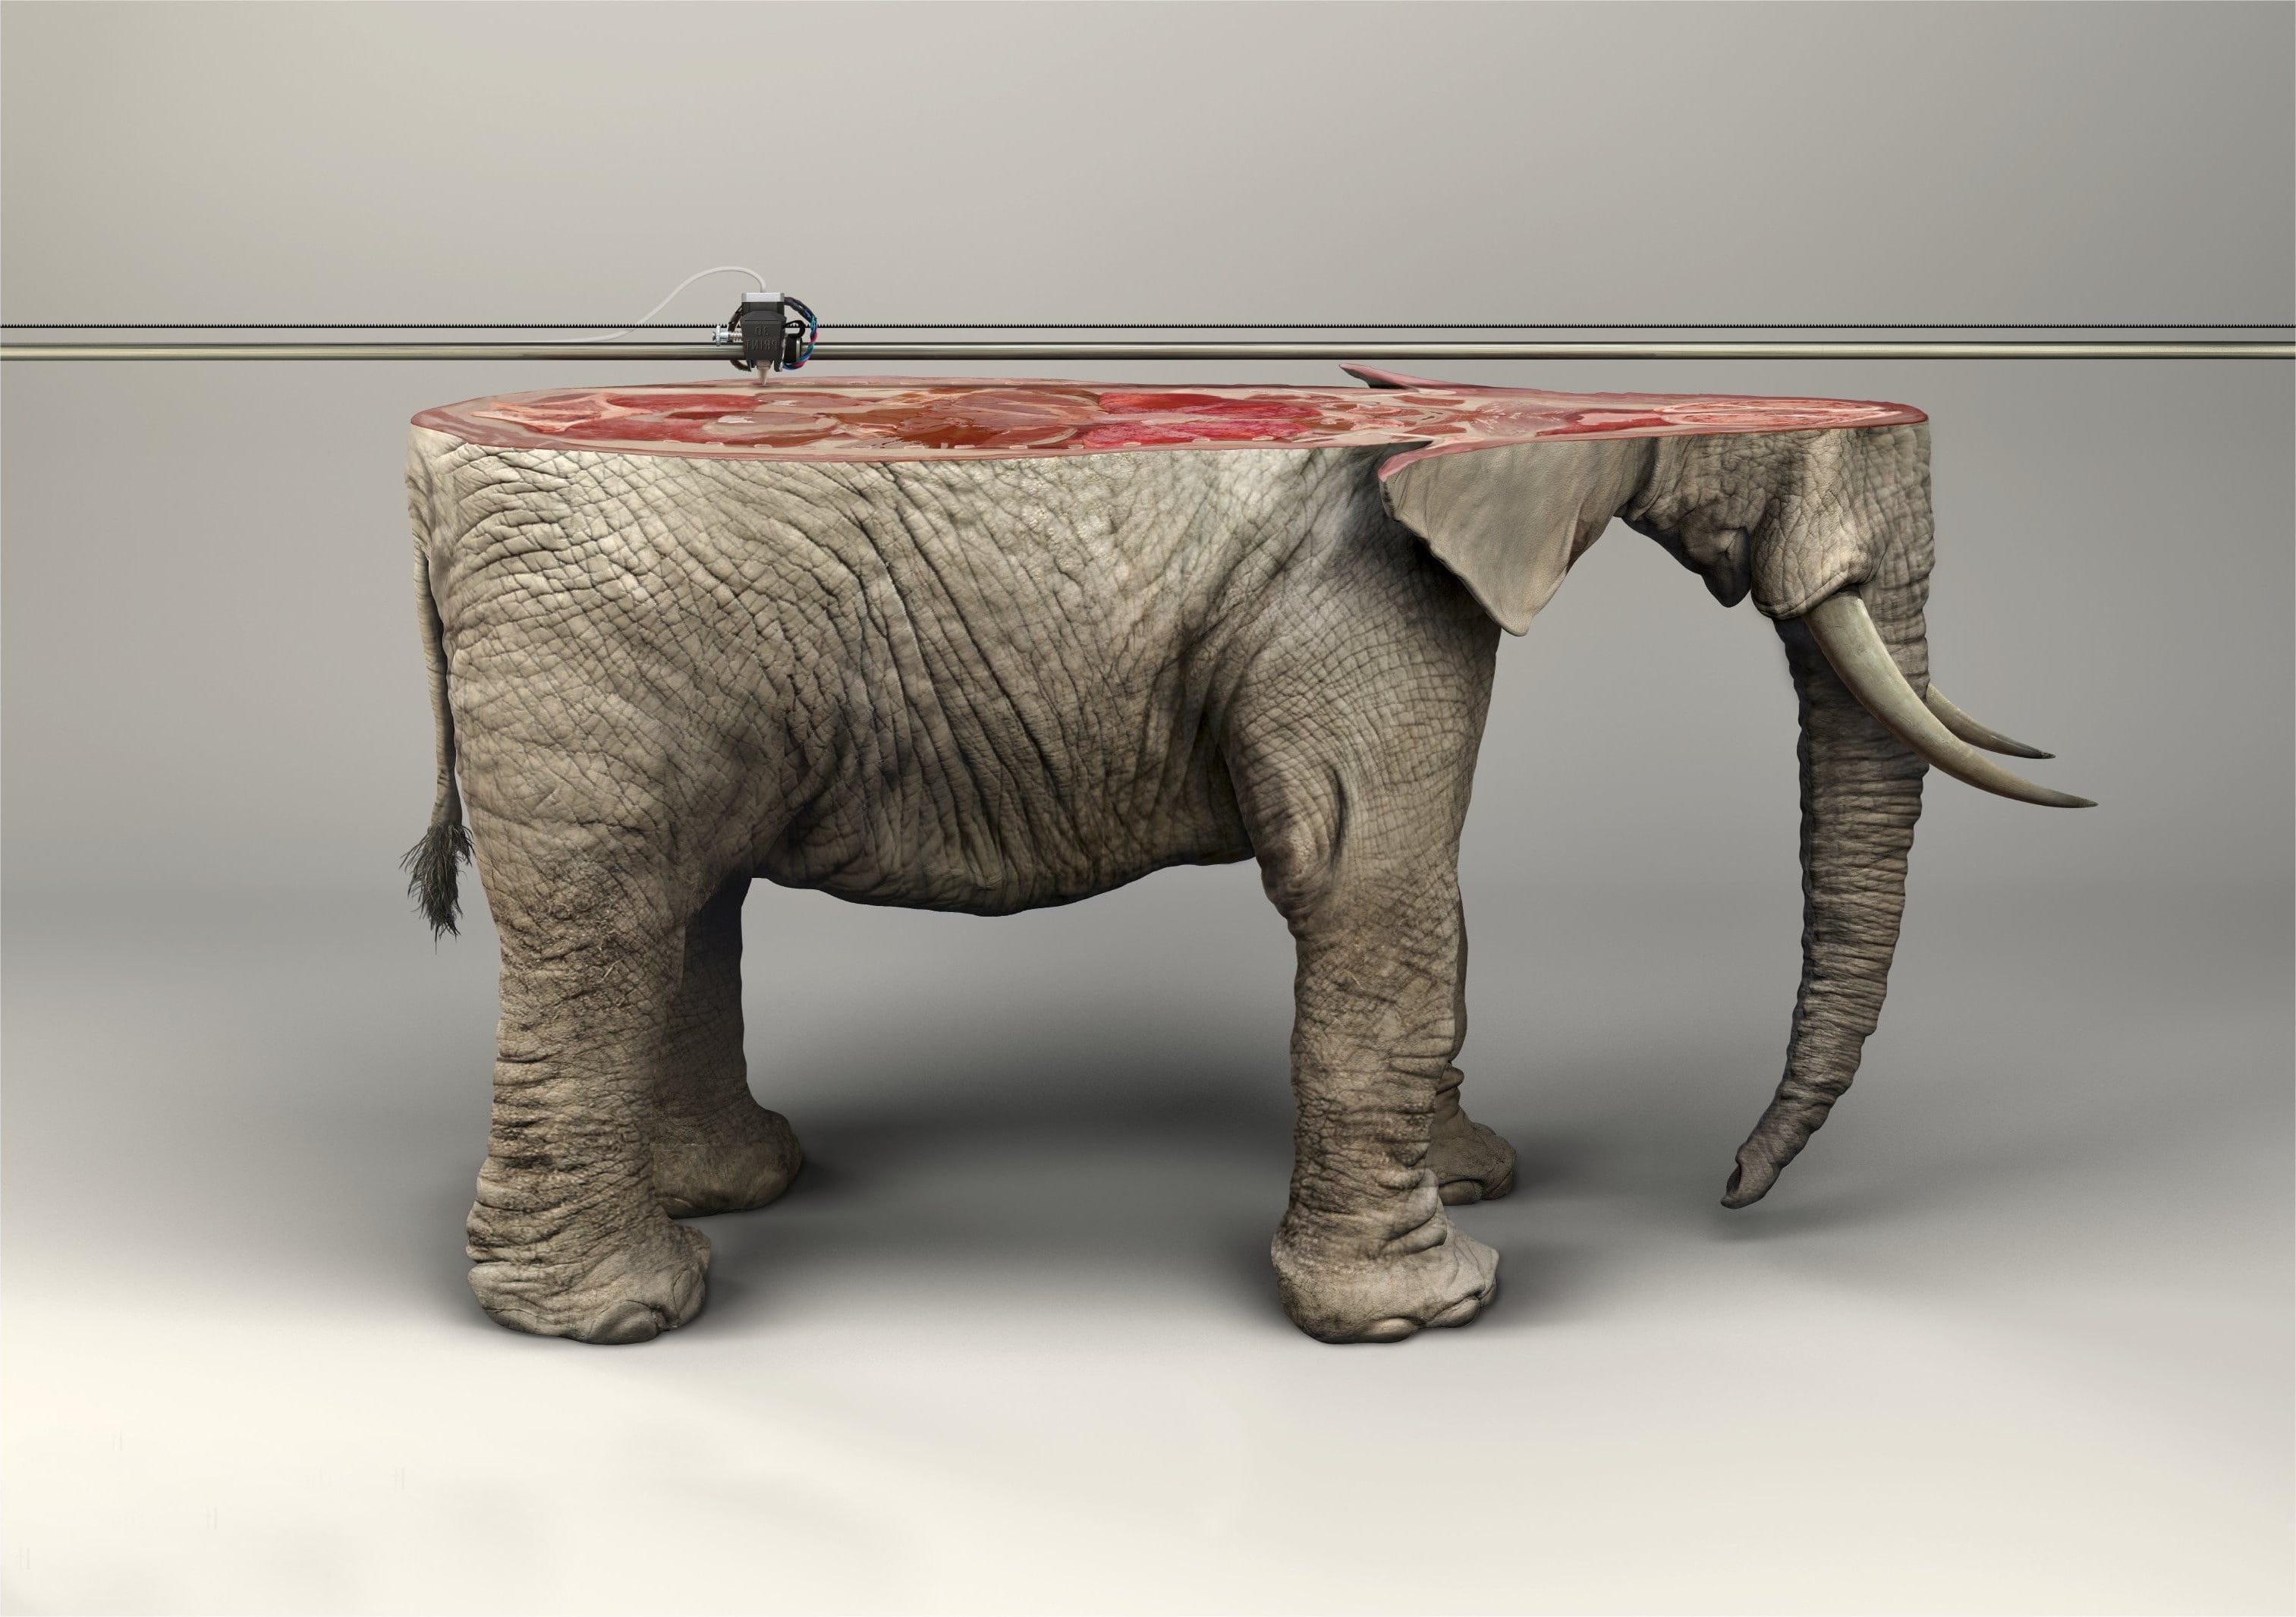 artwork animals digital art elephants 3d object 3d printer skin photo manipulation fangs simple background wires ifaw